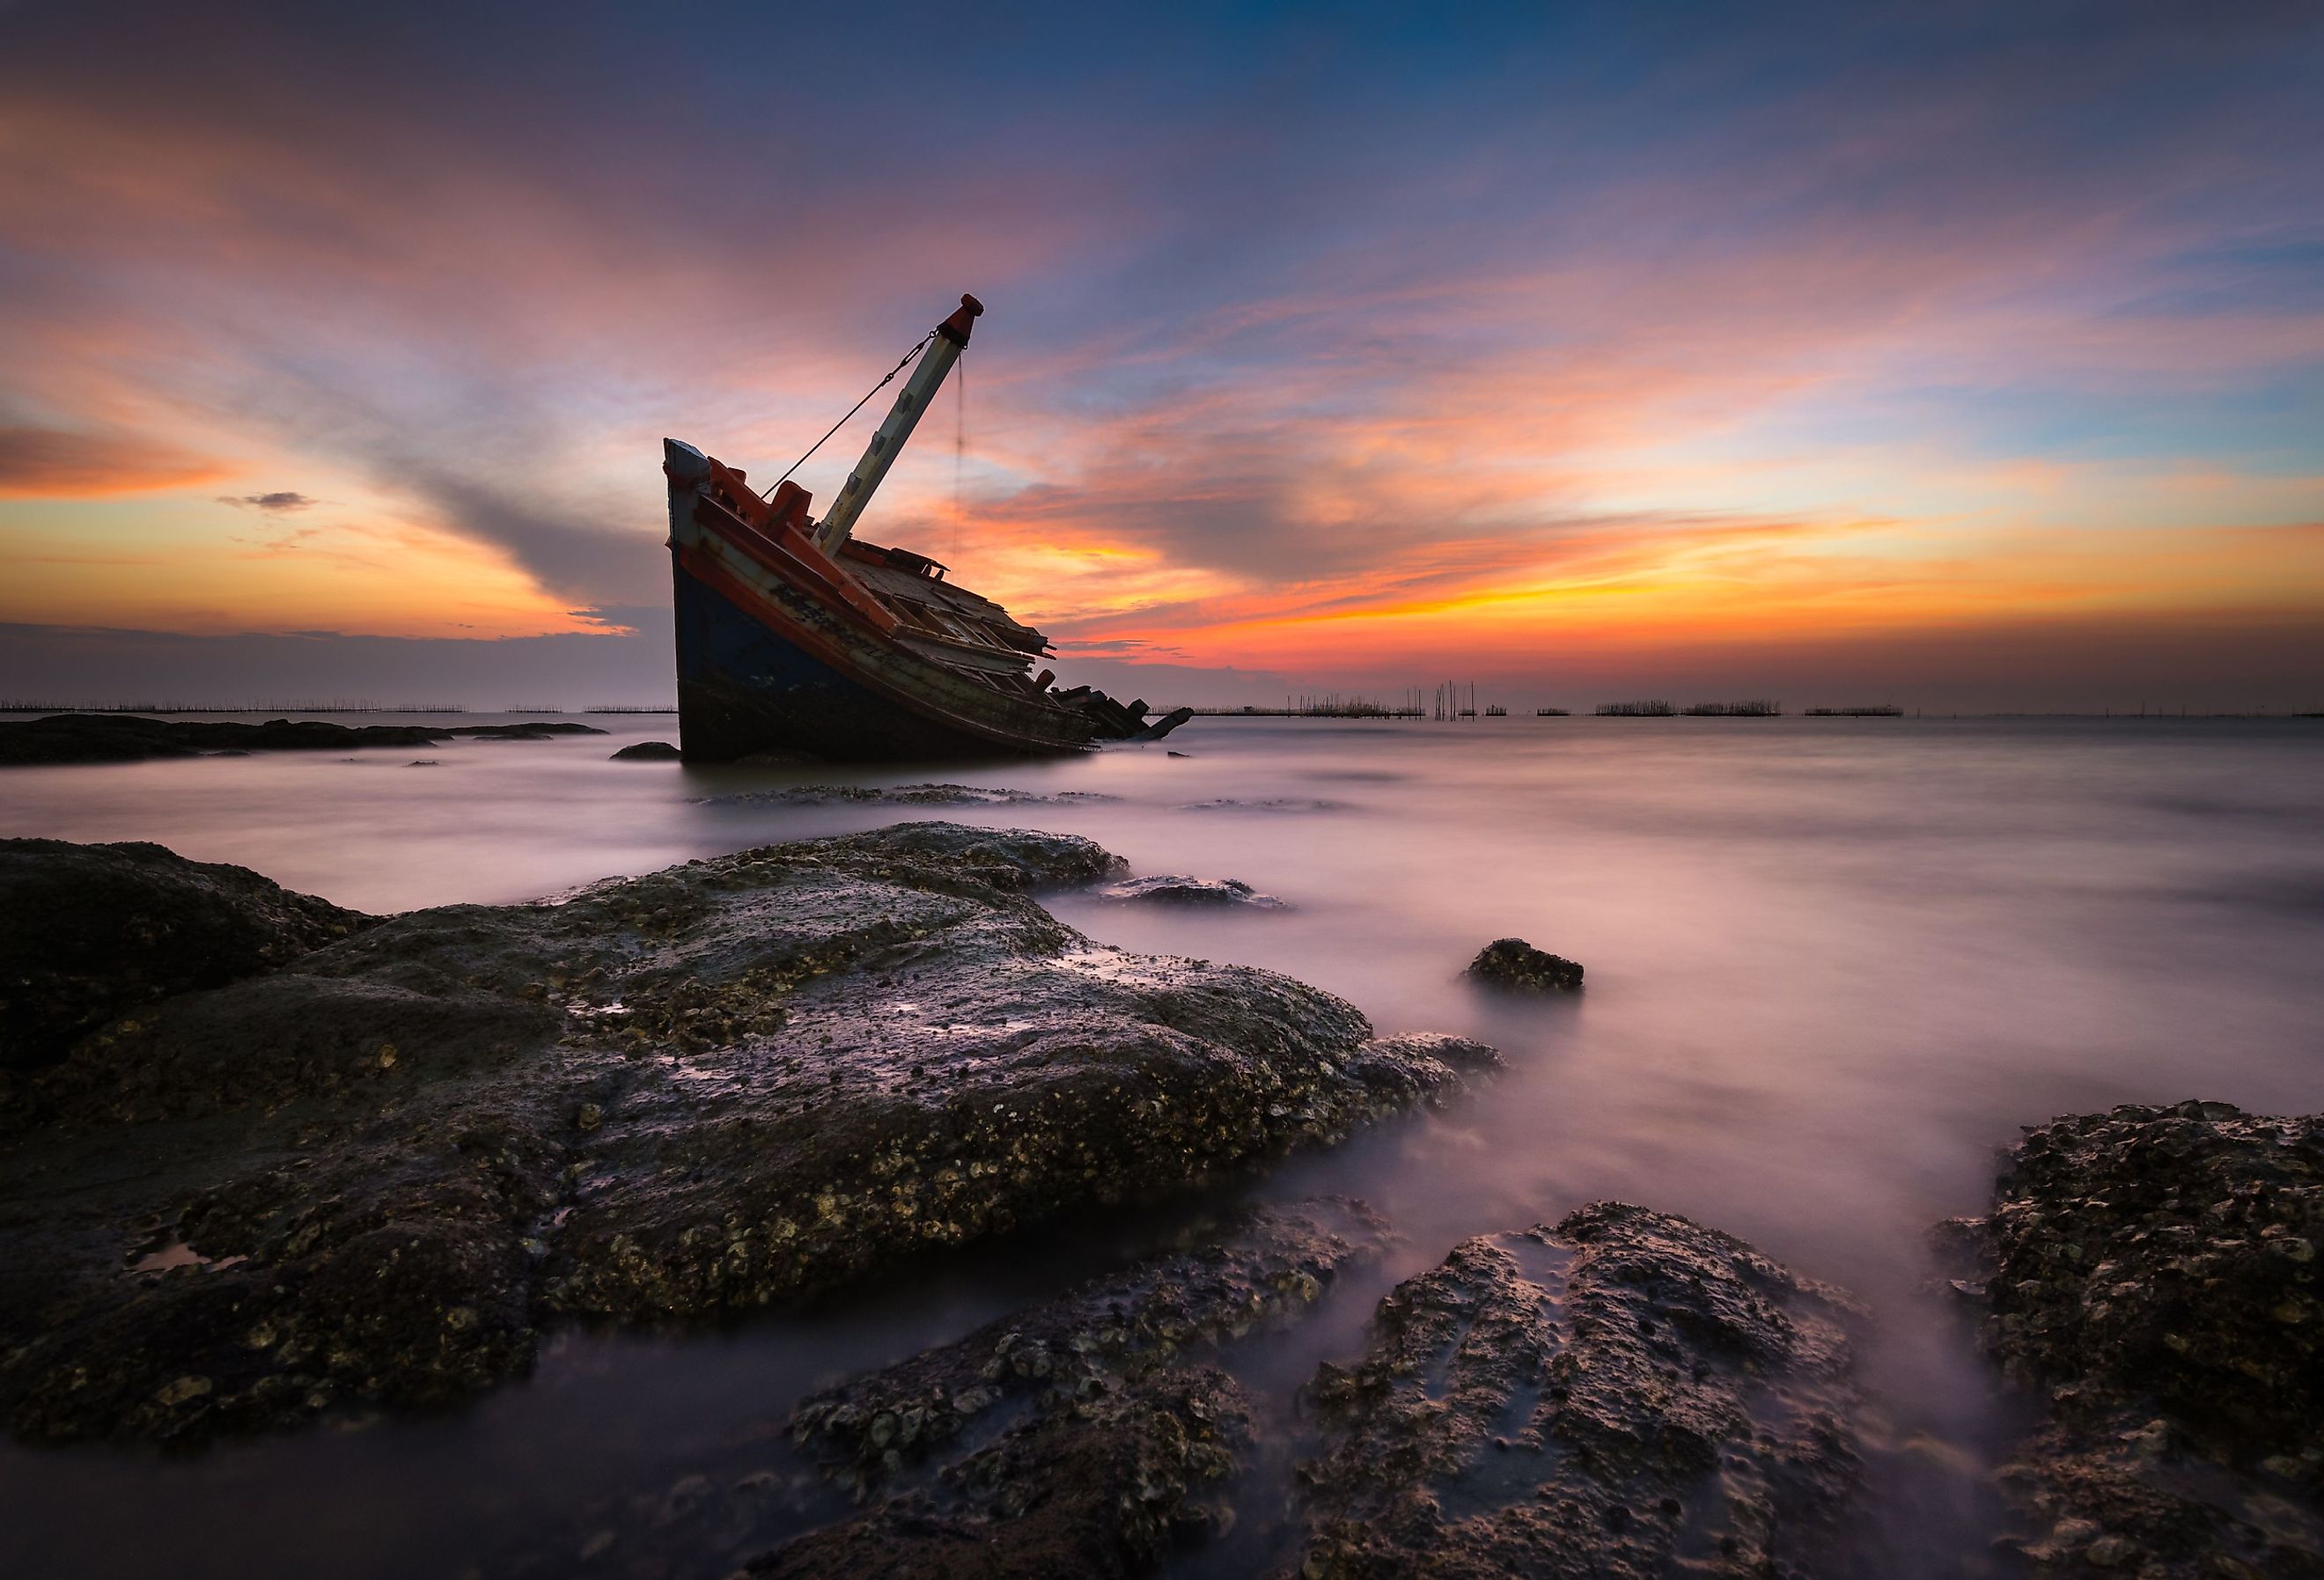 An old shipwreck. Image credit: Sorn340 Studio Images via Shutterstock